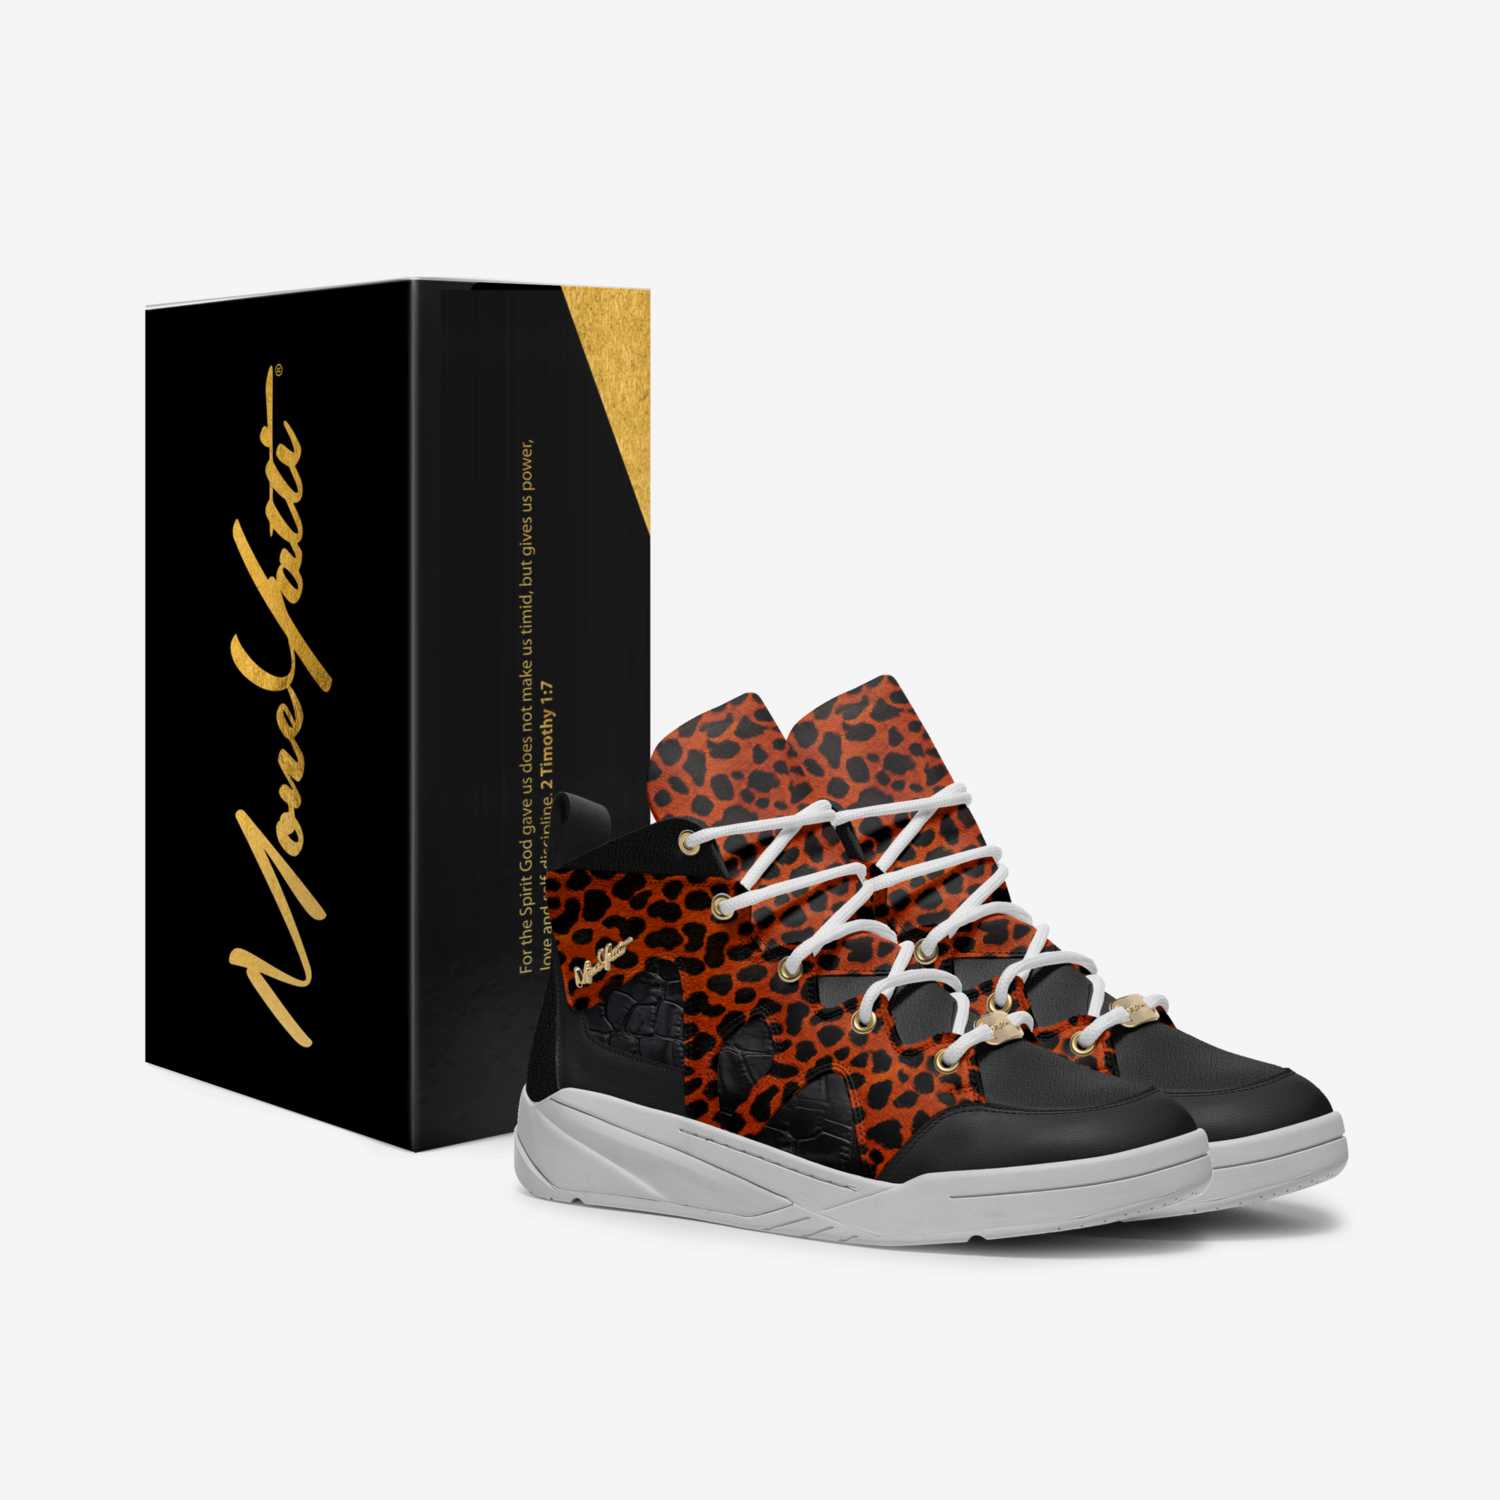 MONEYATTI TAKEOFF 010 custom made in Italy shoes by Moneyatti Brand | Box view